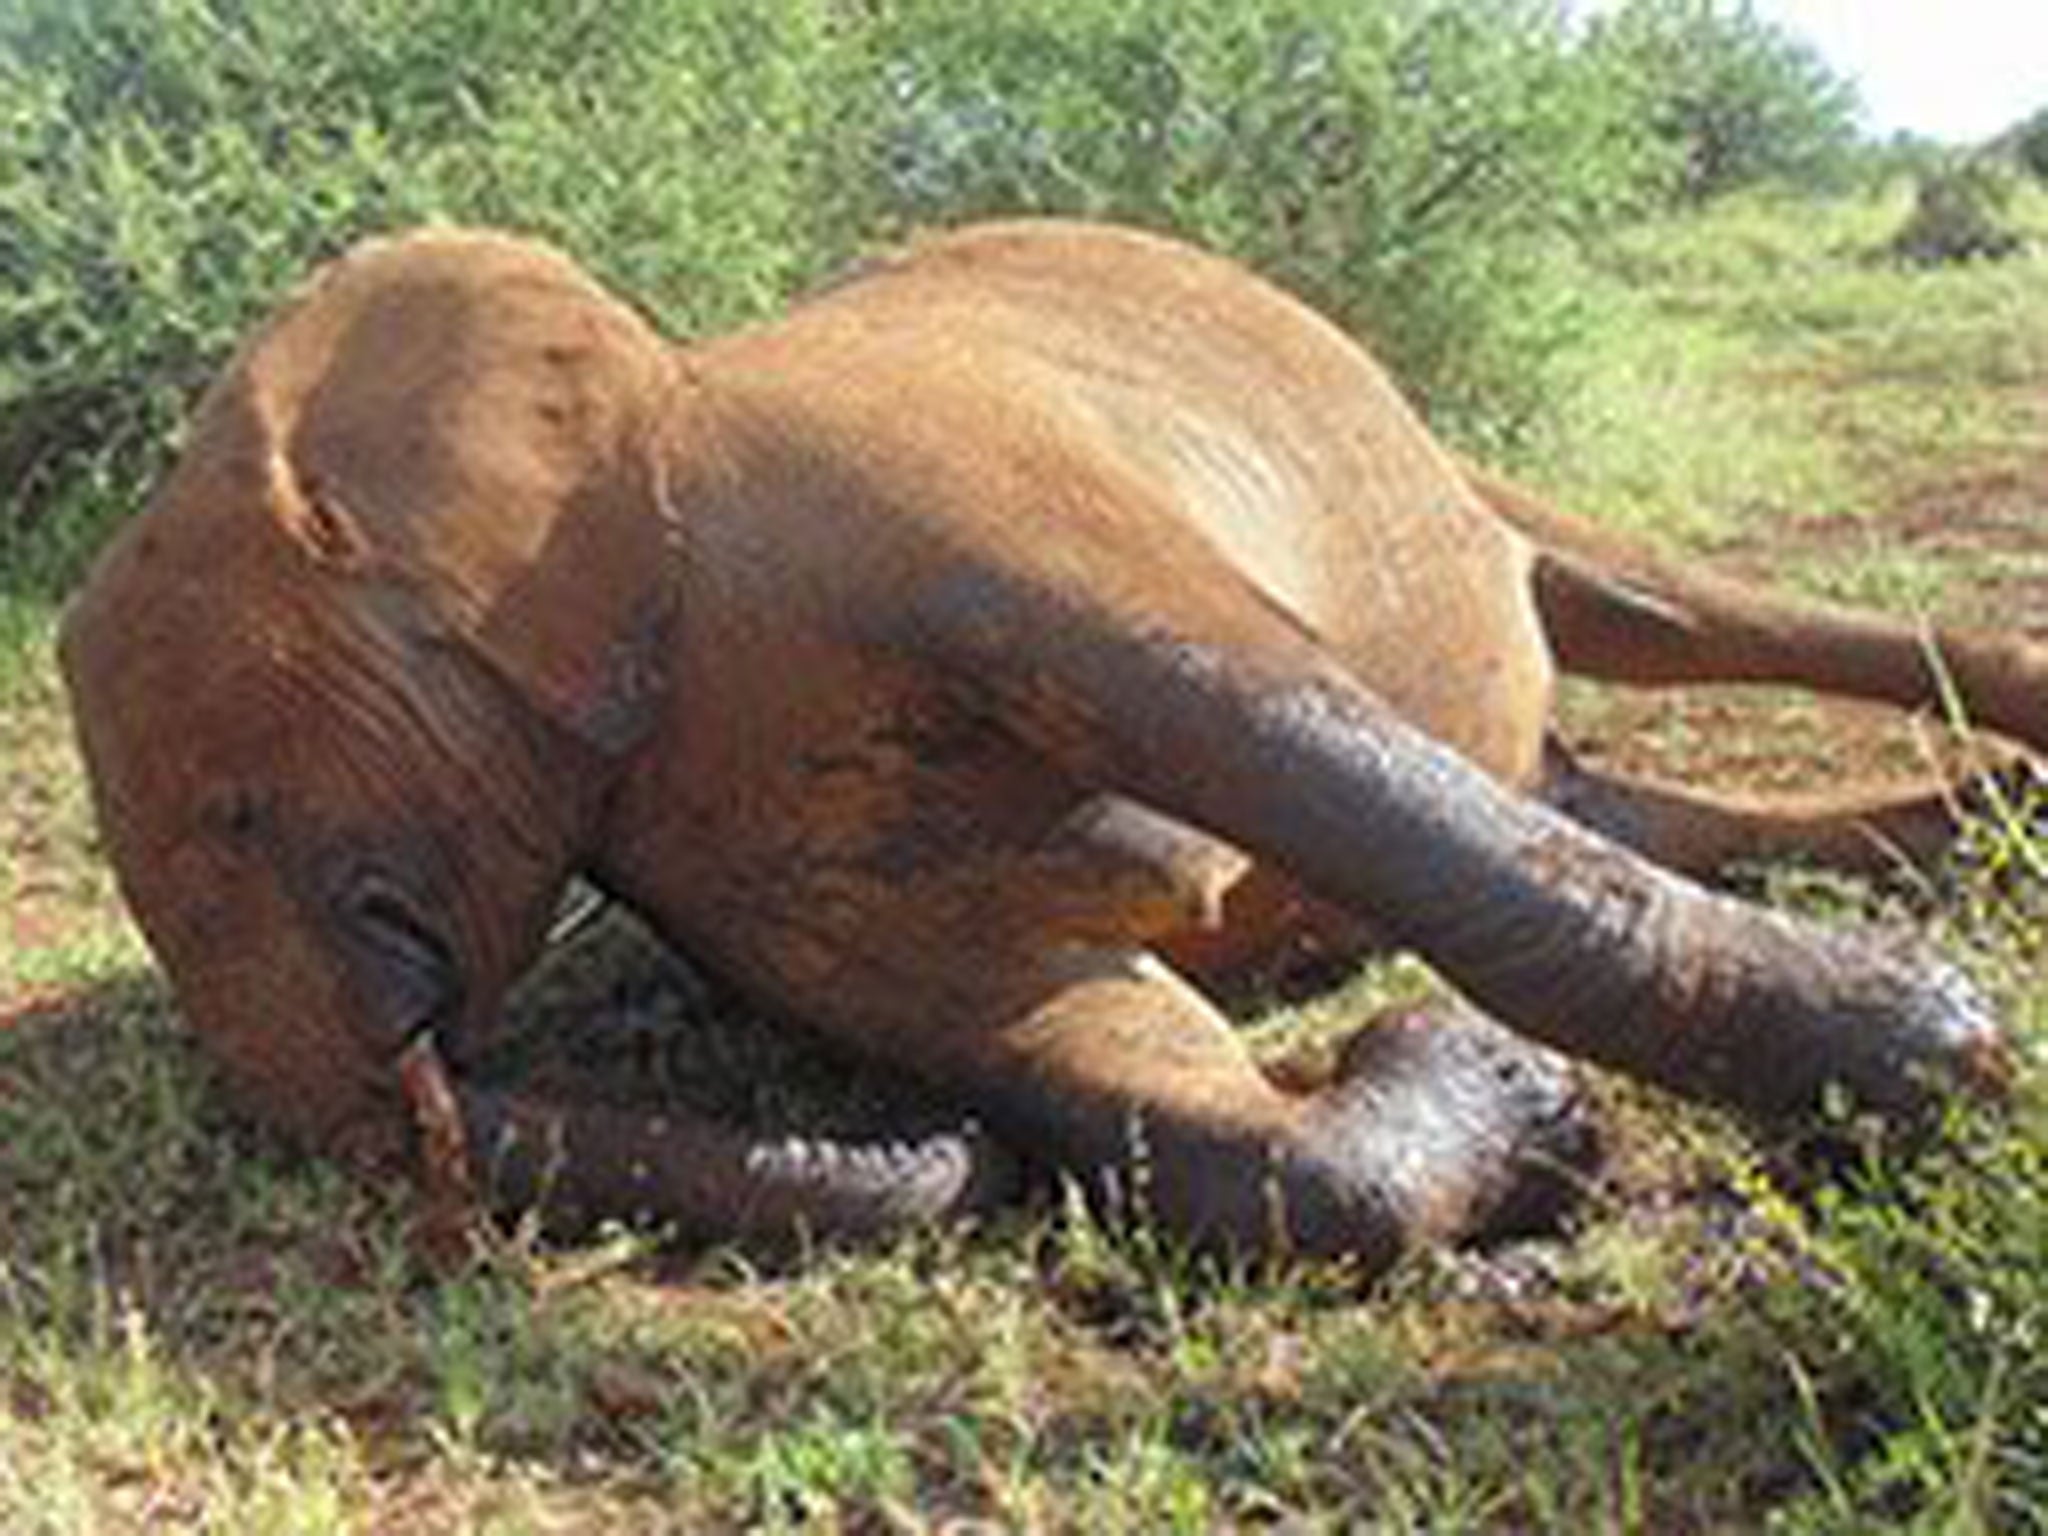 The expectant elephant was illegally killed on Thursday